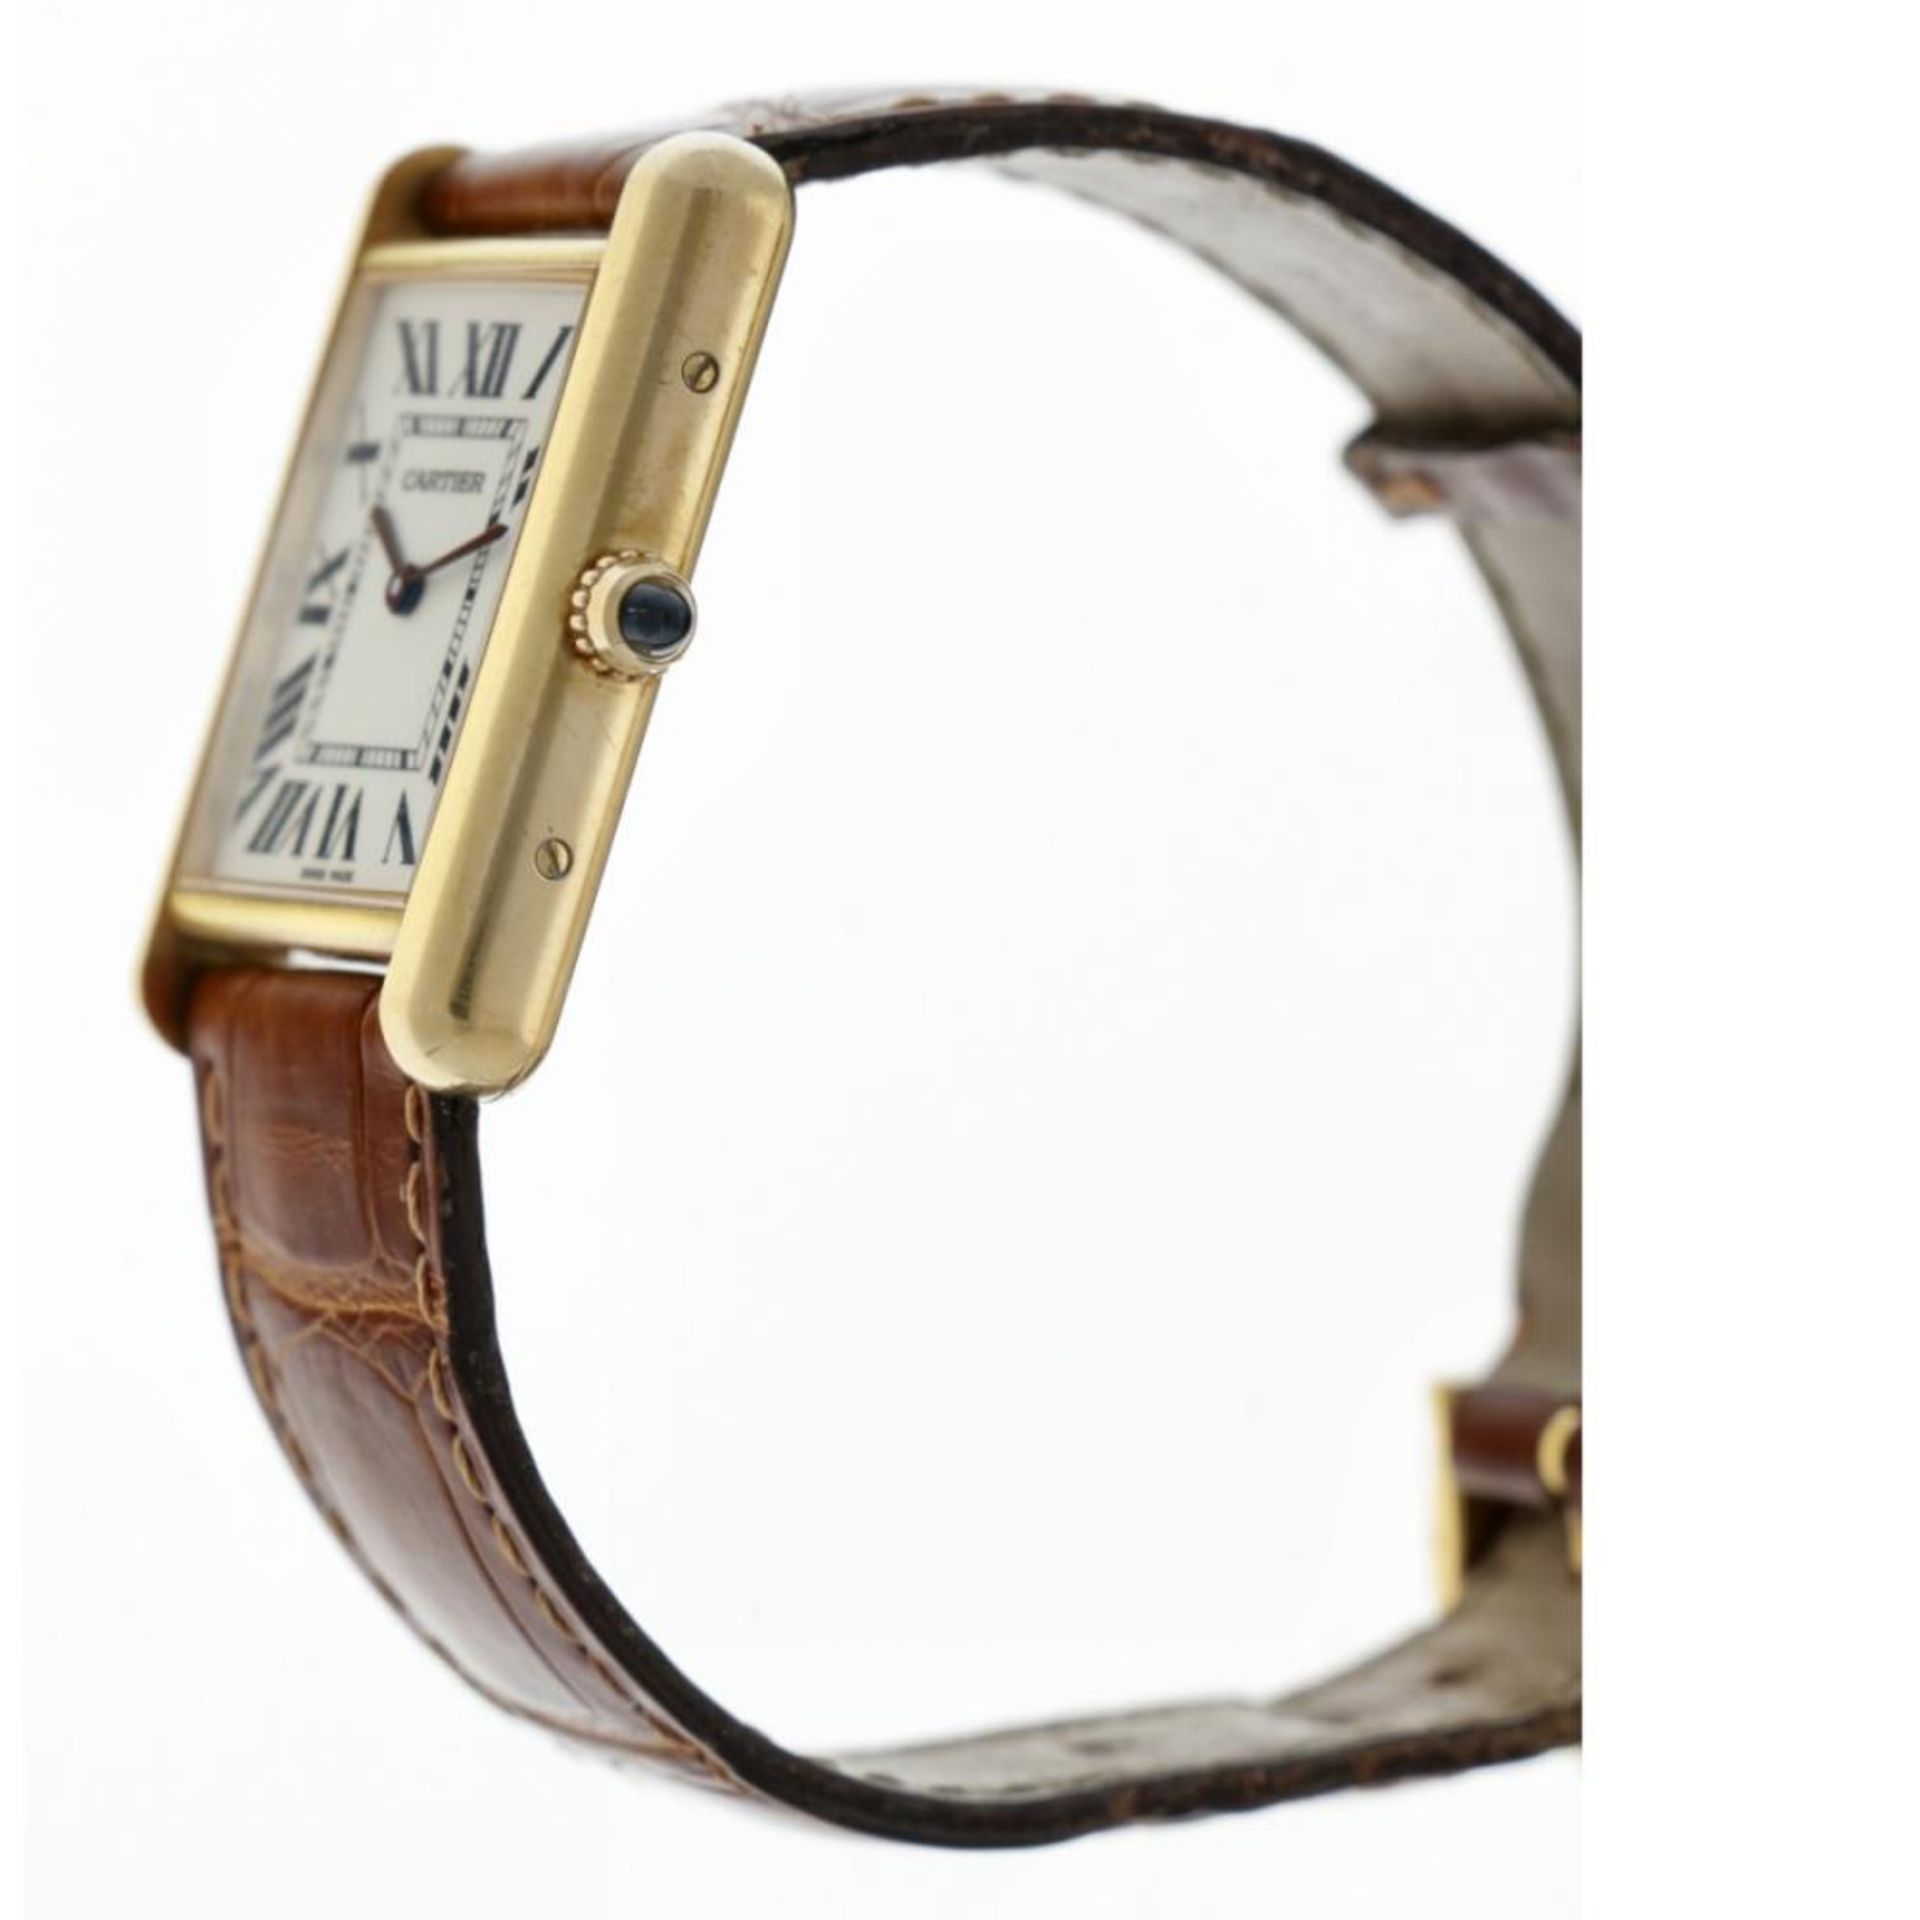 Cartier Tank Louis 2441 - 18 carat gold - Men's watch - approx. 2005. - Image 10 of 10